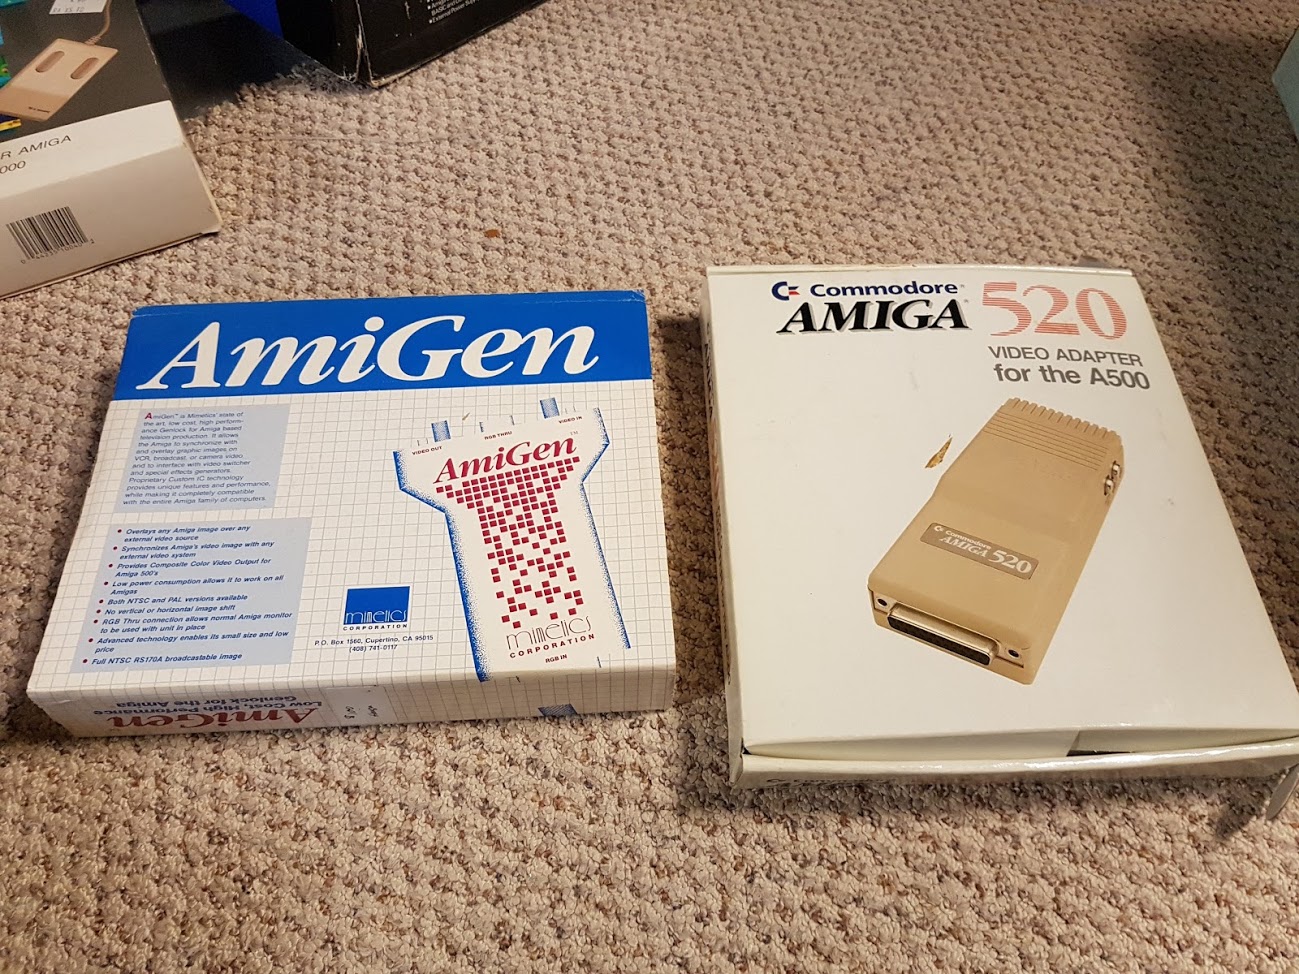 Amiga Genlock device for overlaying Amiga graphics on top of live video and the Amiga 520 RF modulator.